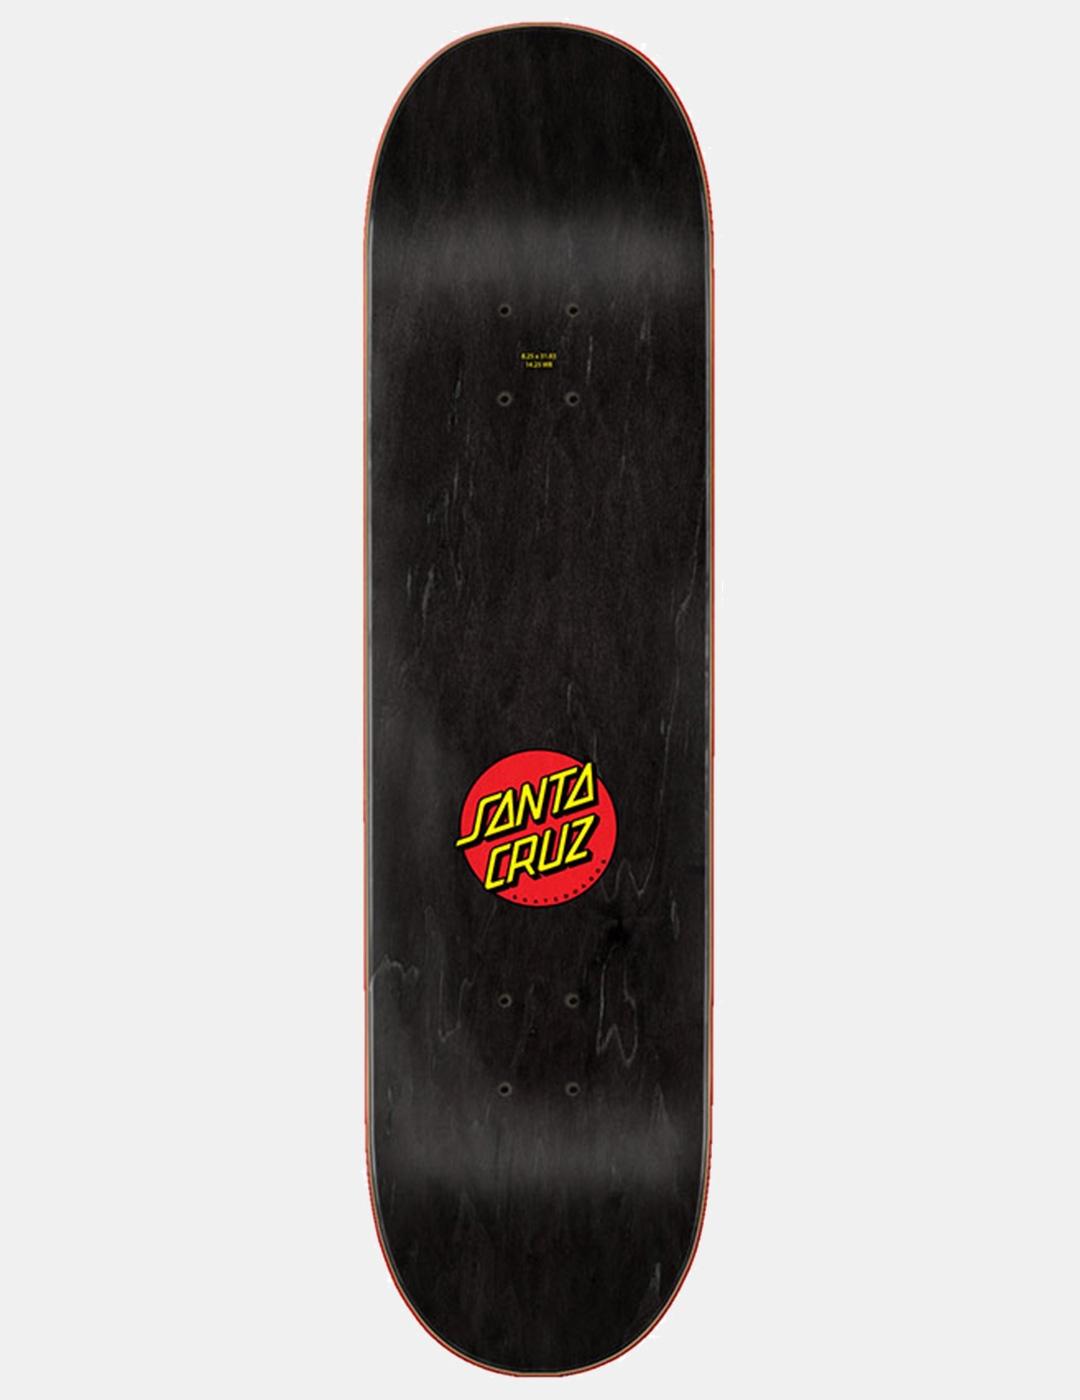 Tabla Skate SANTA CRUZ CLASSIC DOT 8.25' x 31.83' - Negro